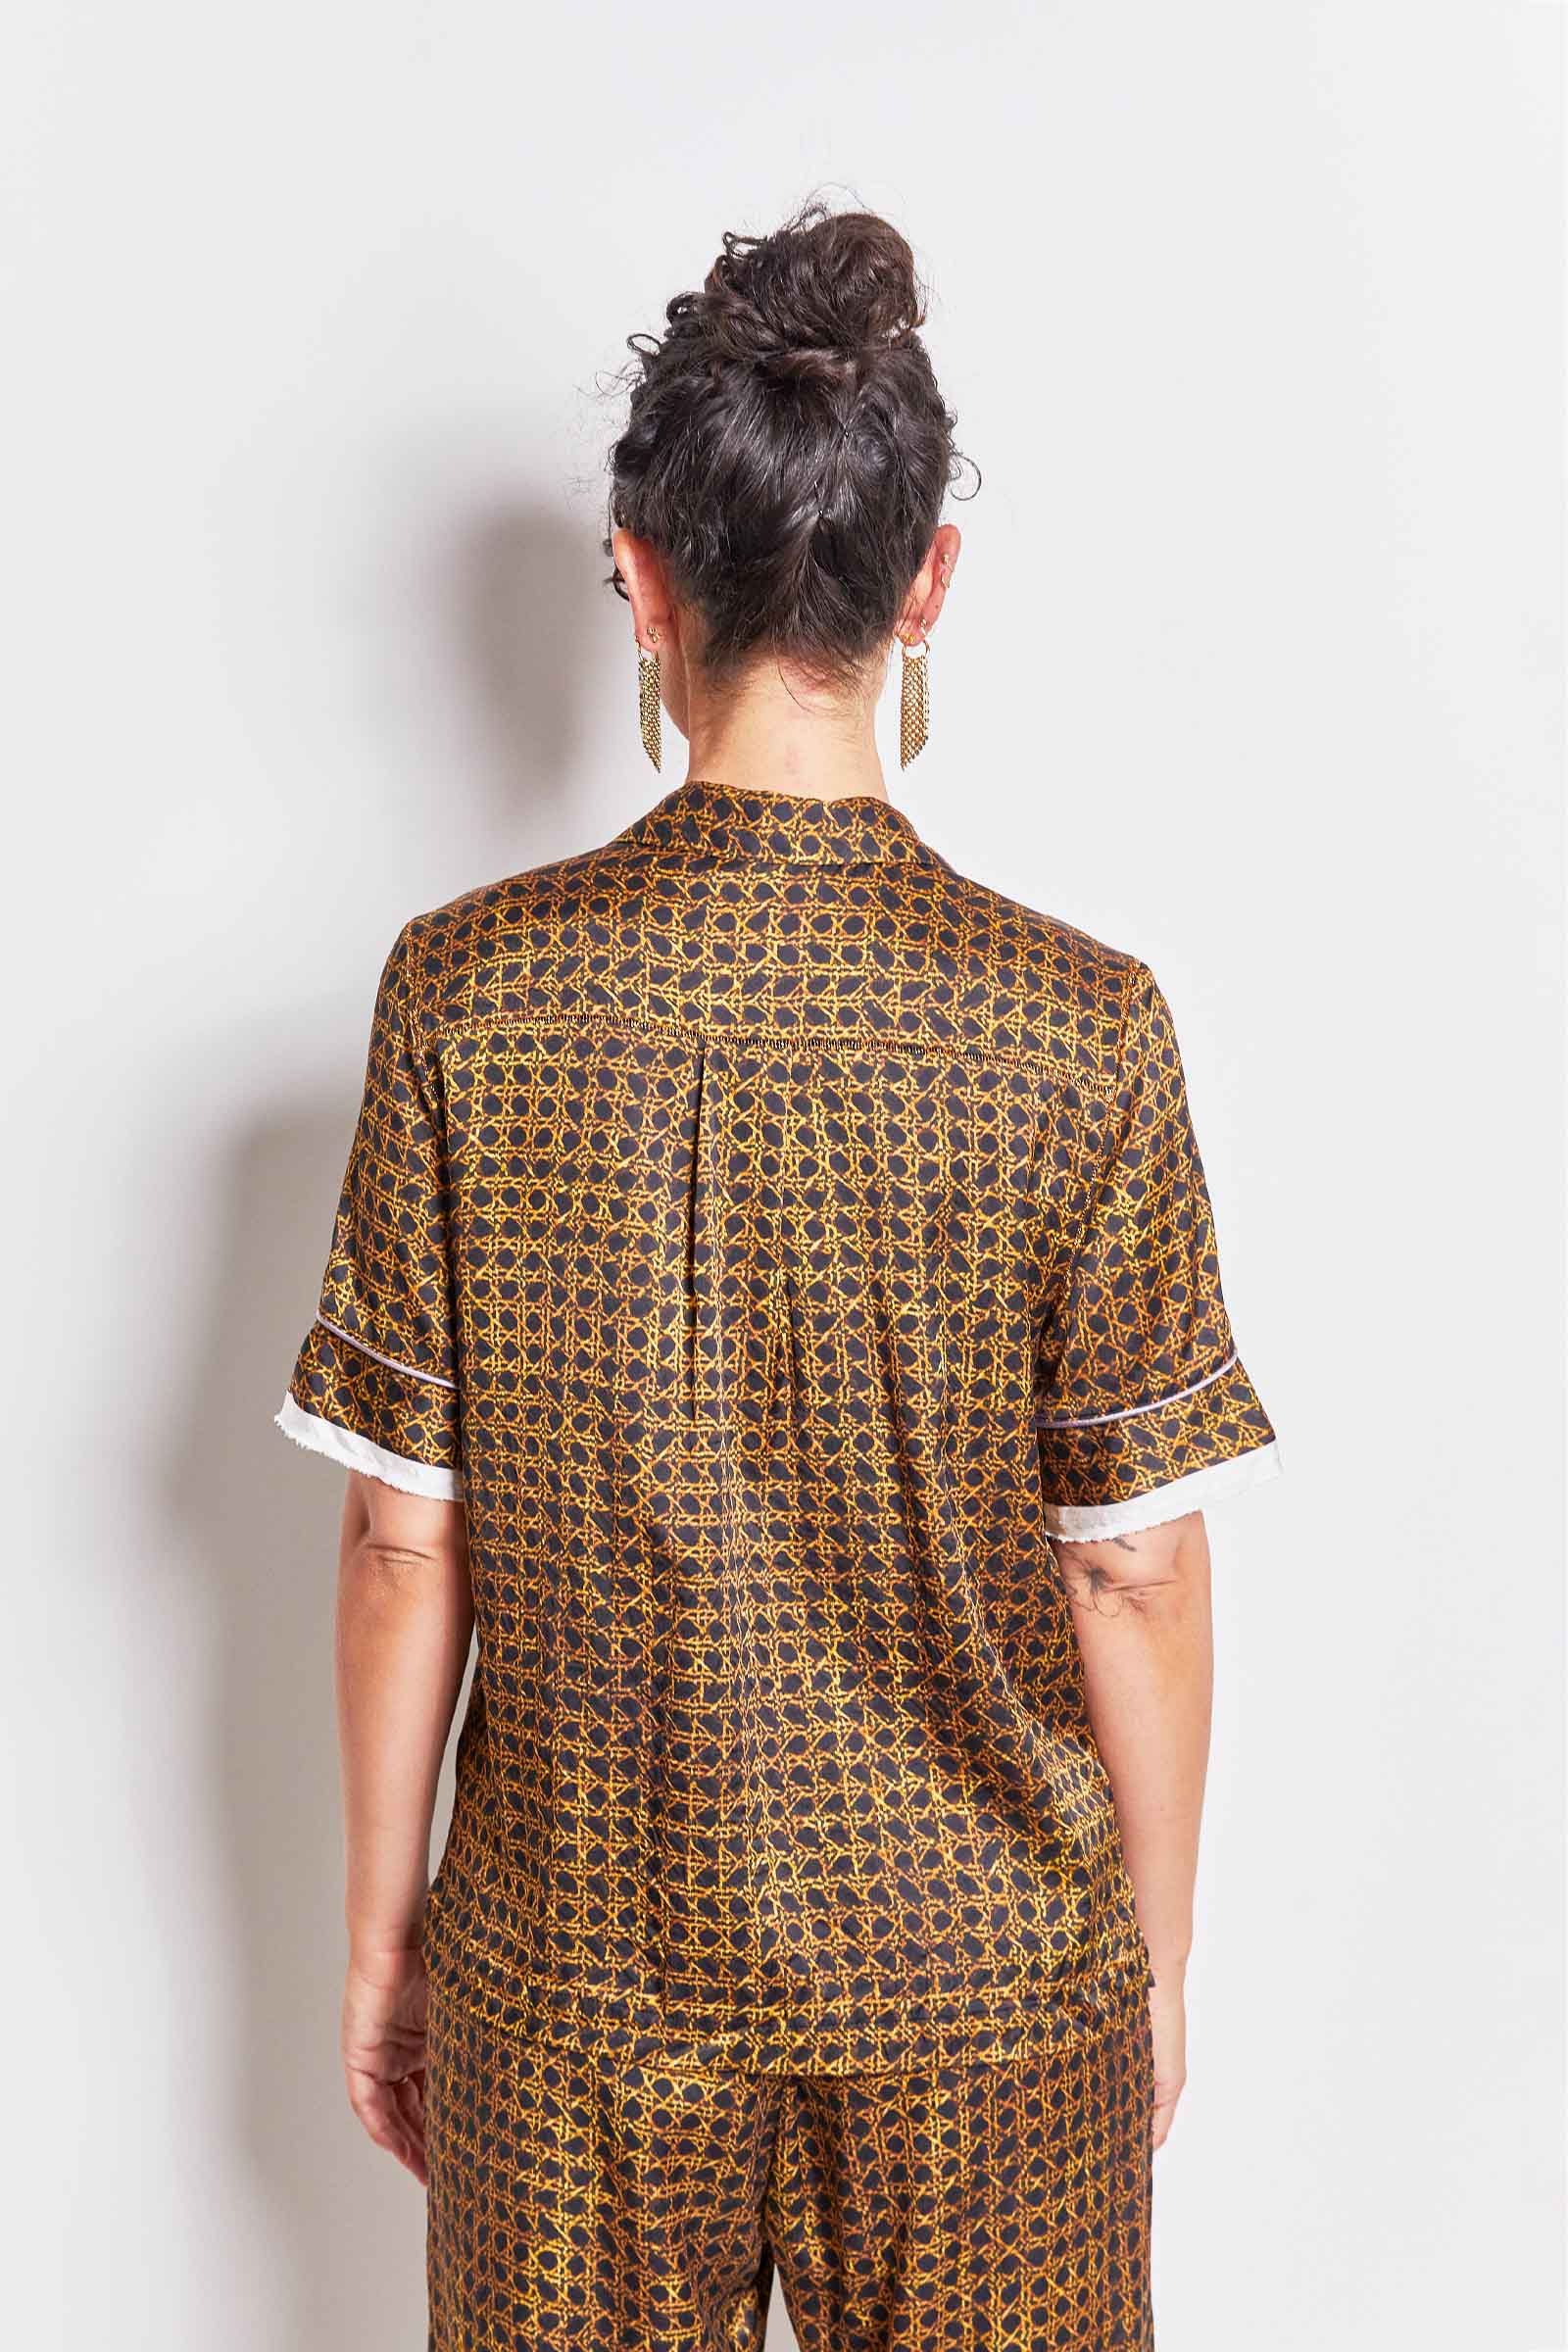 byfreer&#39;s silk printed day pyjama set - the cyril silk shirt.